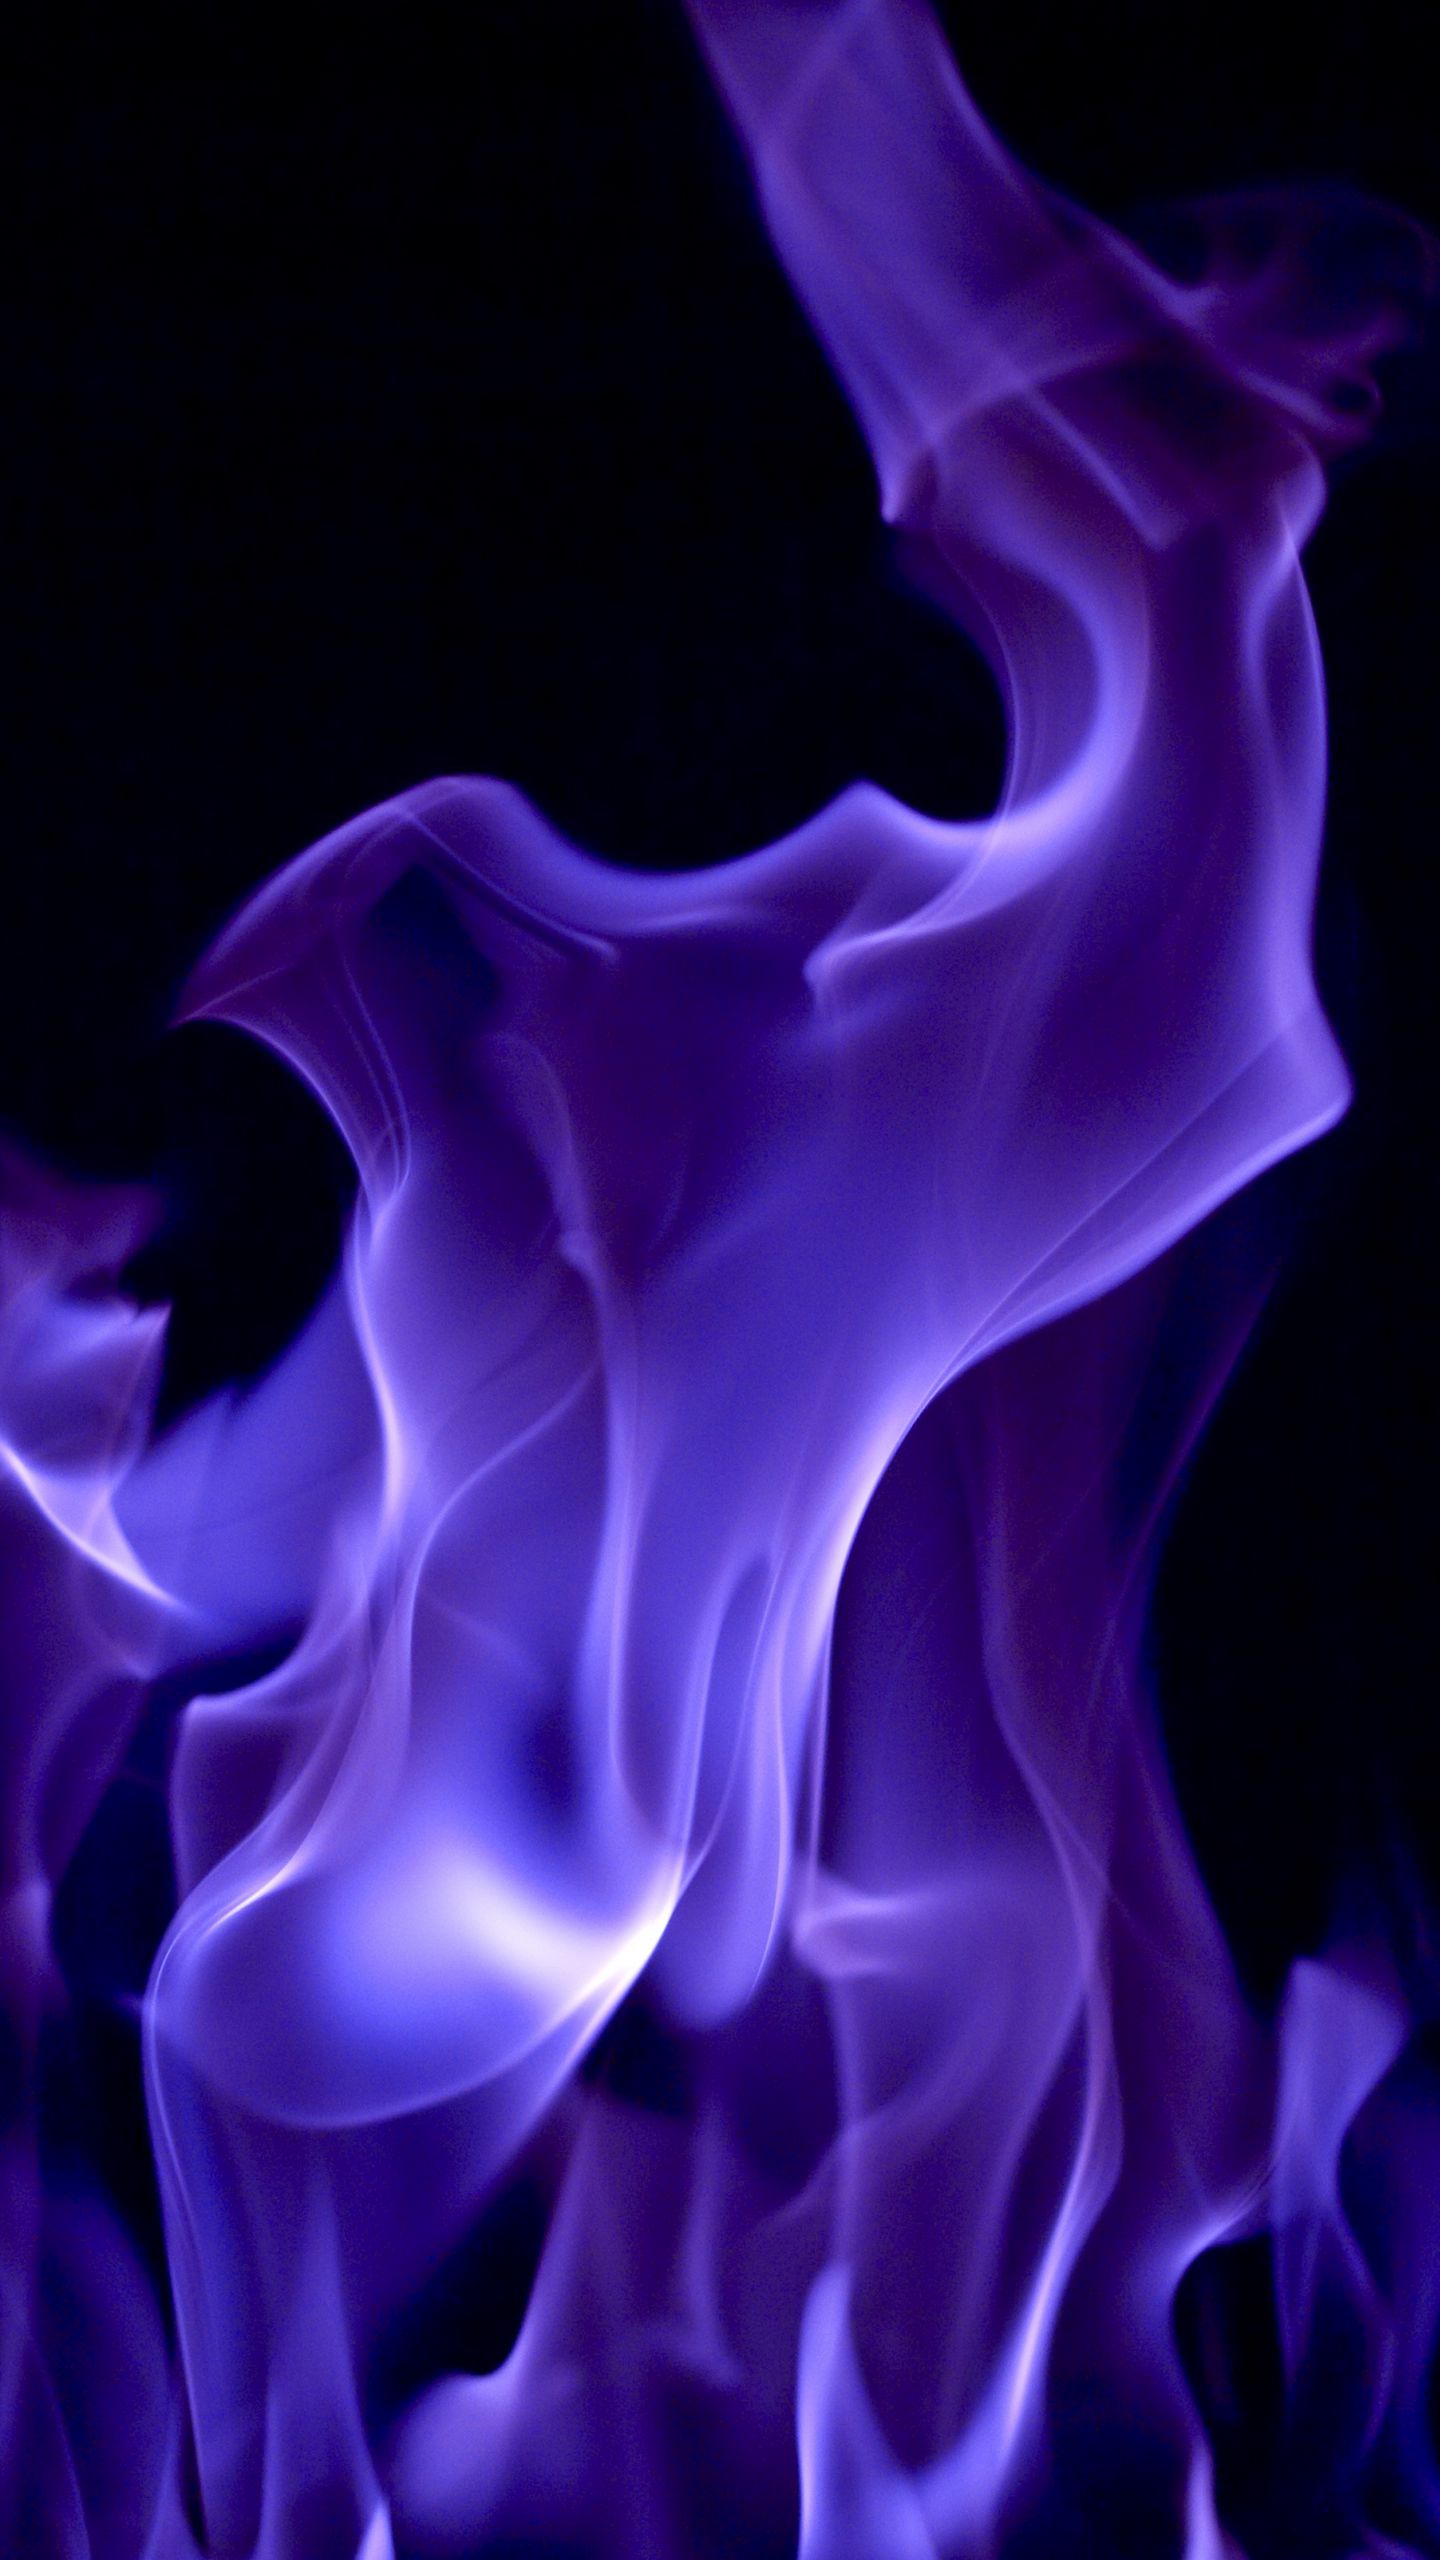 Download wallpaper 1440x2560 smoke, fire, color, purple qhd samsung galaxy  s6, s7, edge, note, lg g4 hd background